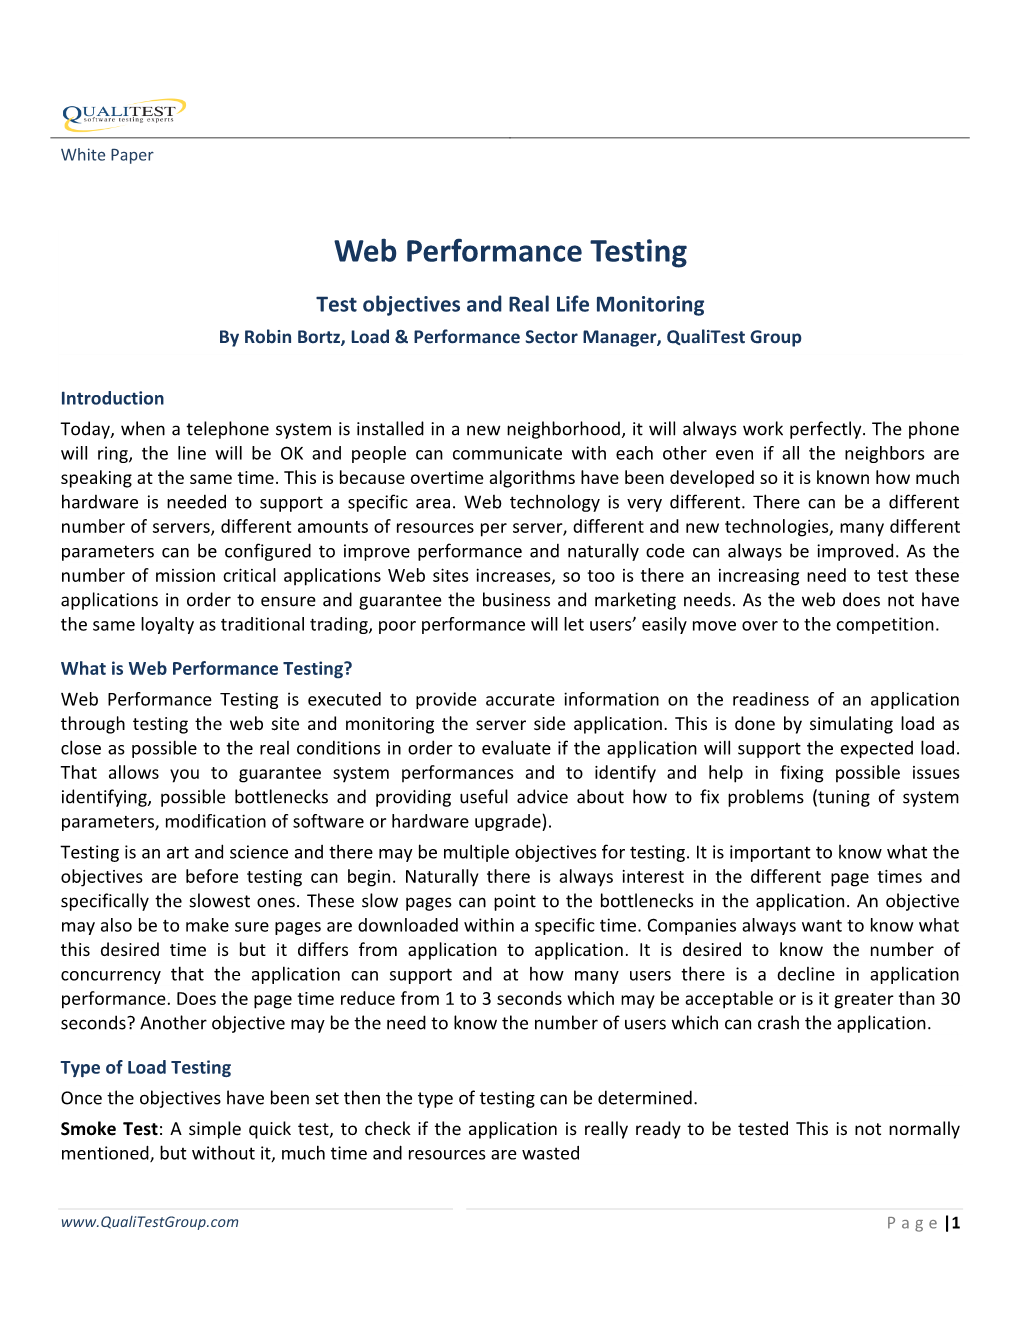 Web Performance Testing